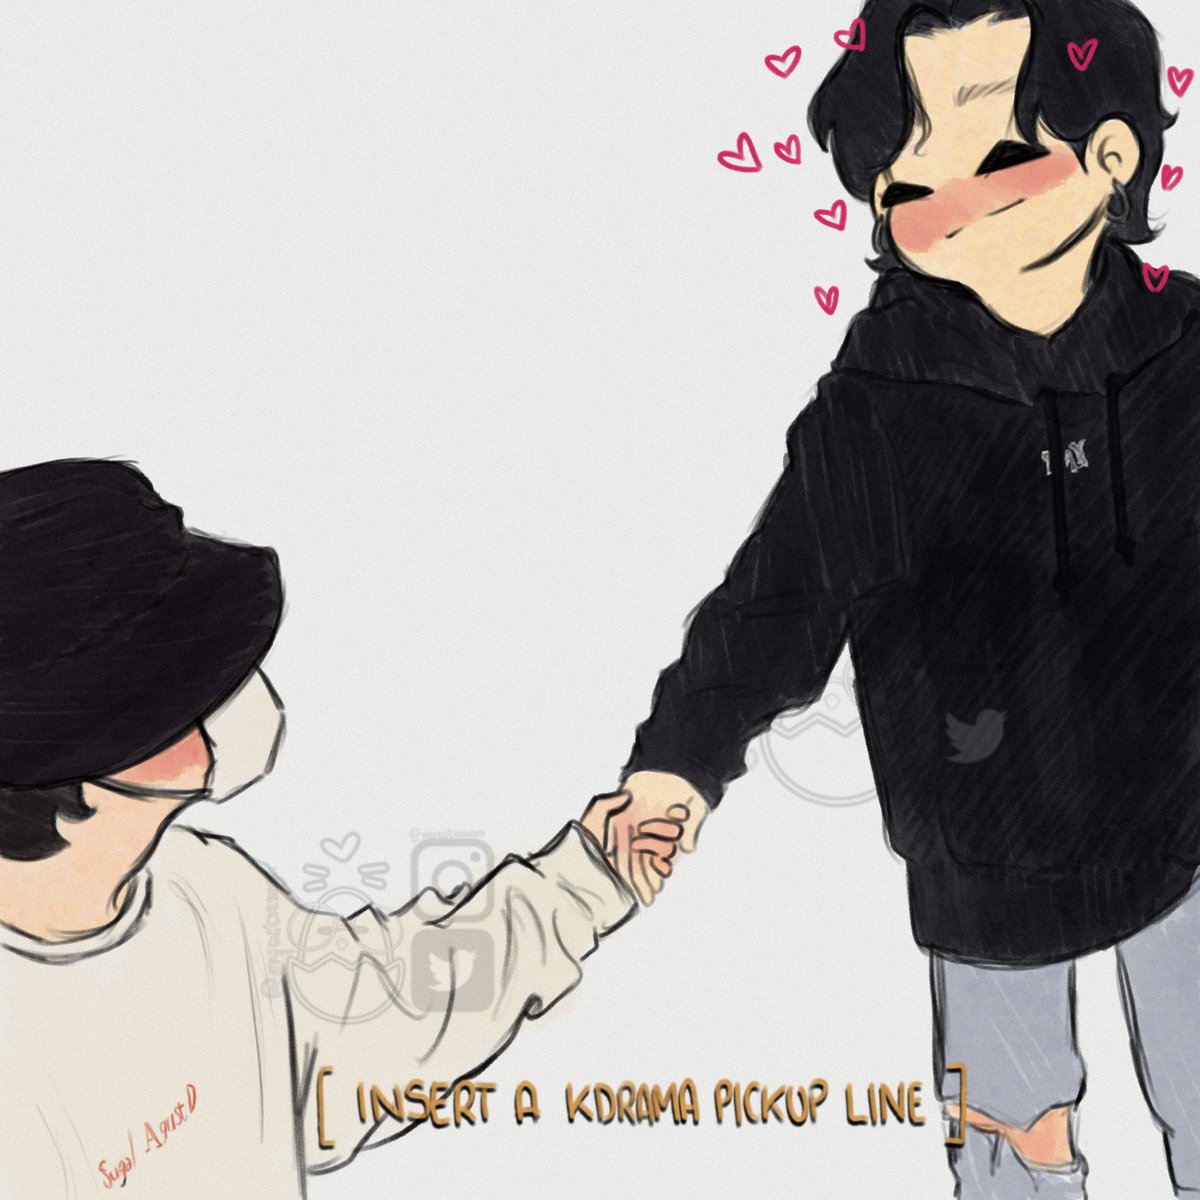 cheesy boy holding hands 🐣🐱
#yoonmin #sujim #슈짐